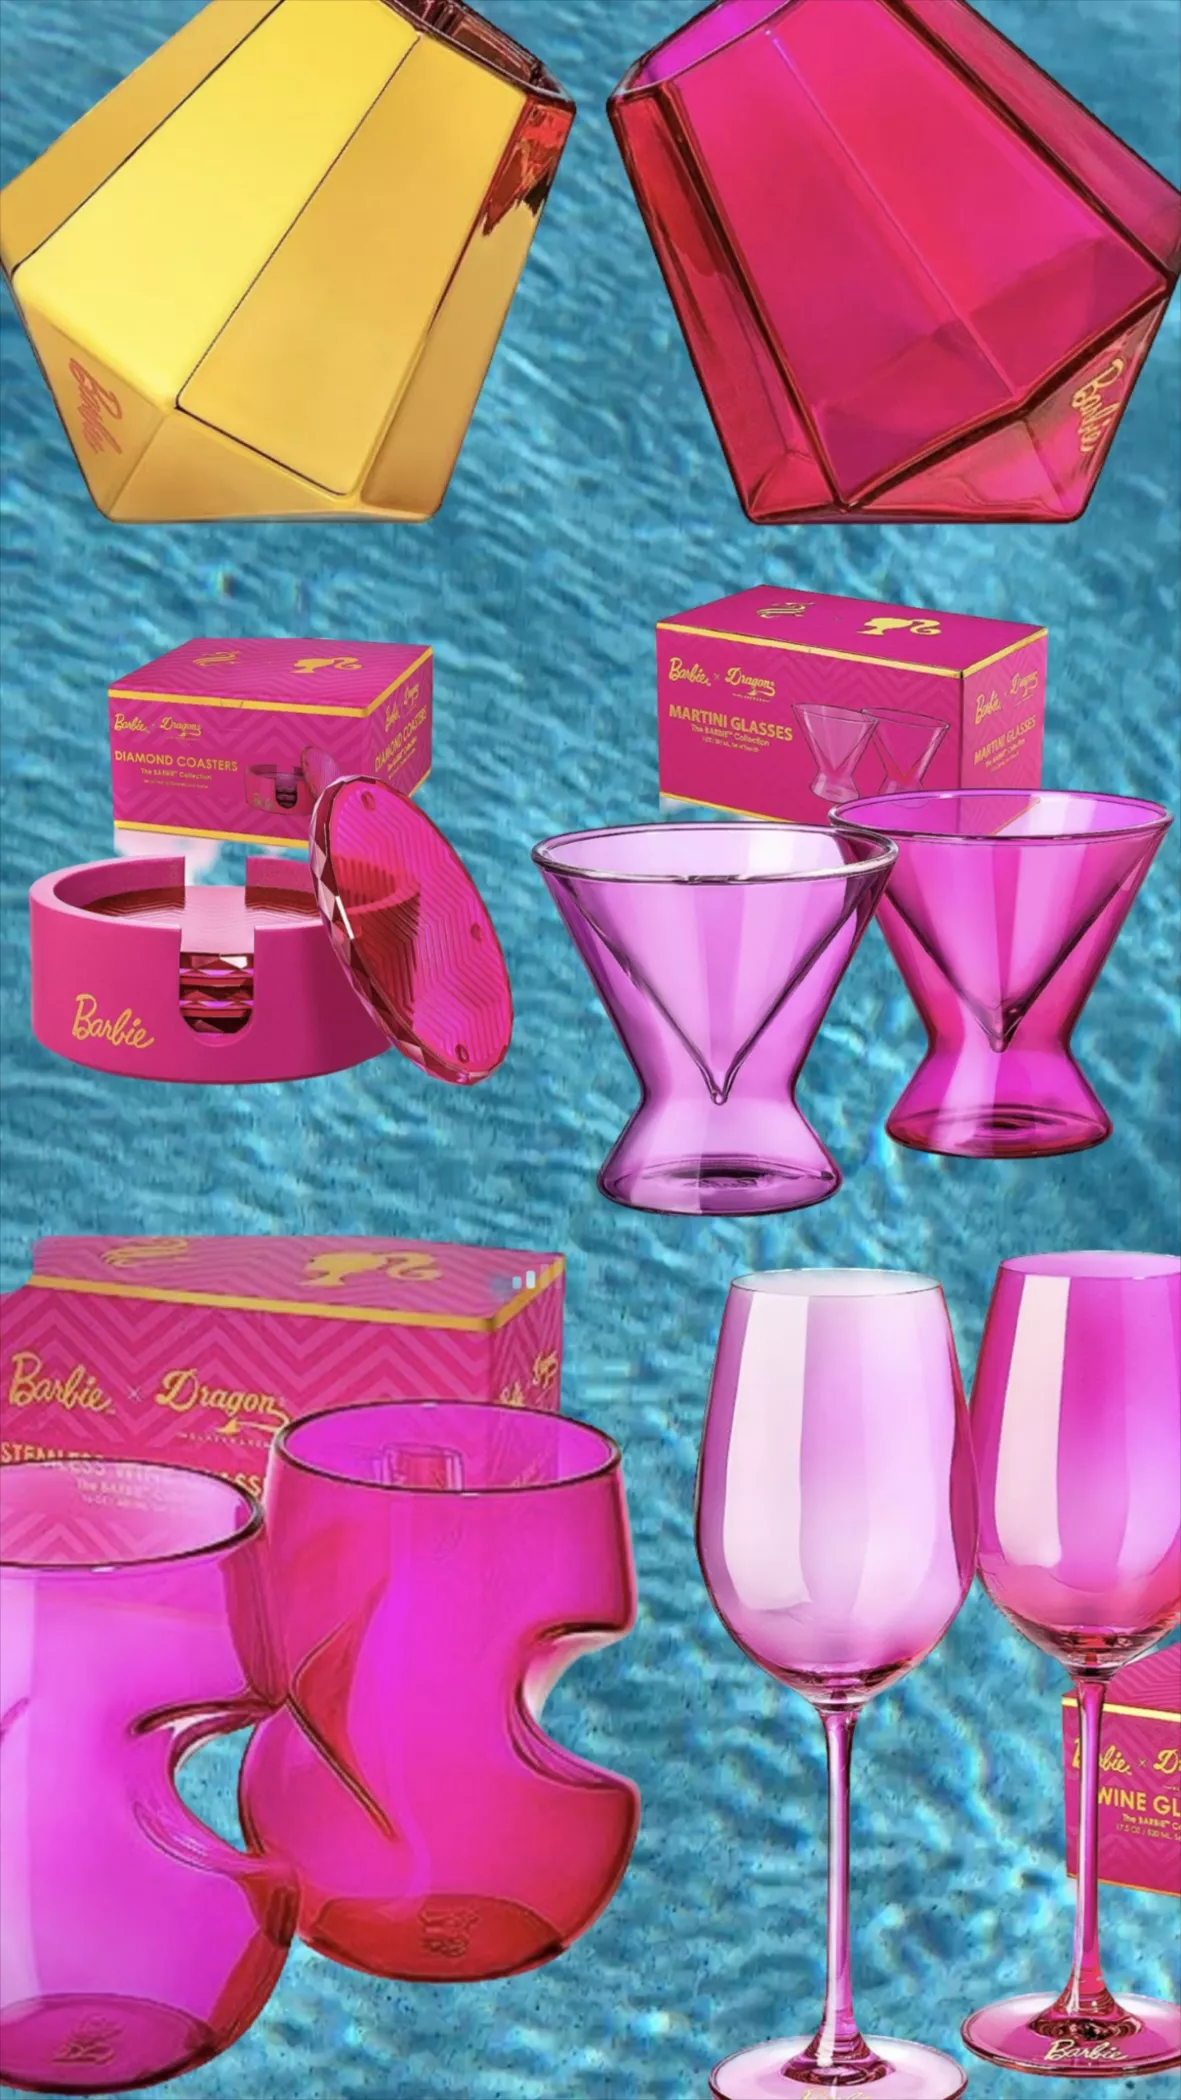 Barbie x Dragon Glassware Glasses 